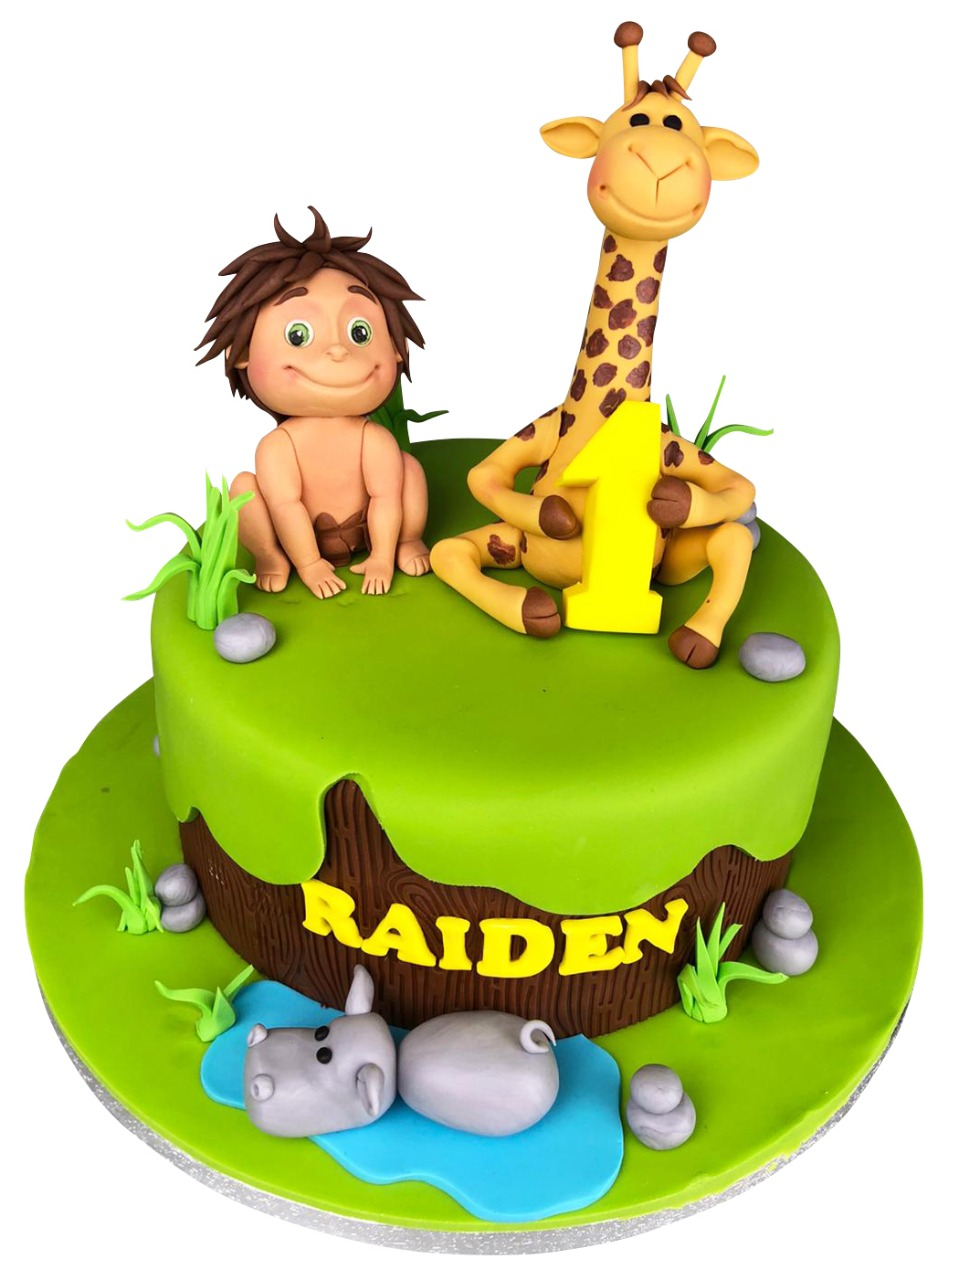 Giraffe and Arlo Topped Jungle Theme Birthday Cake for Kids